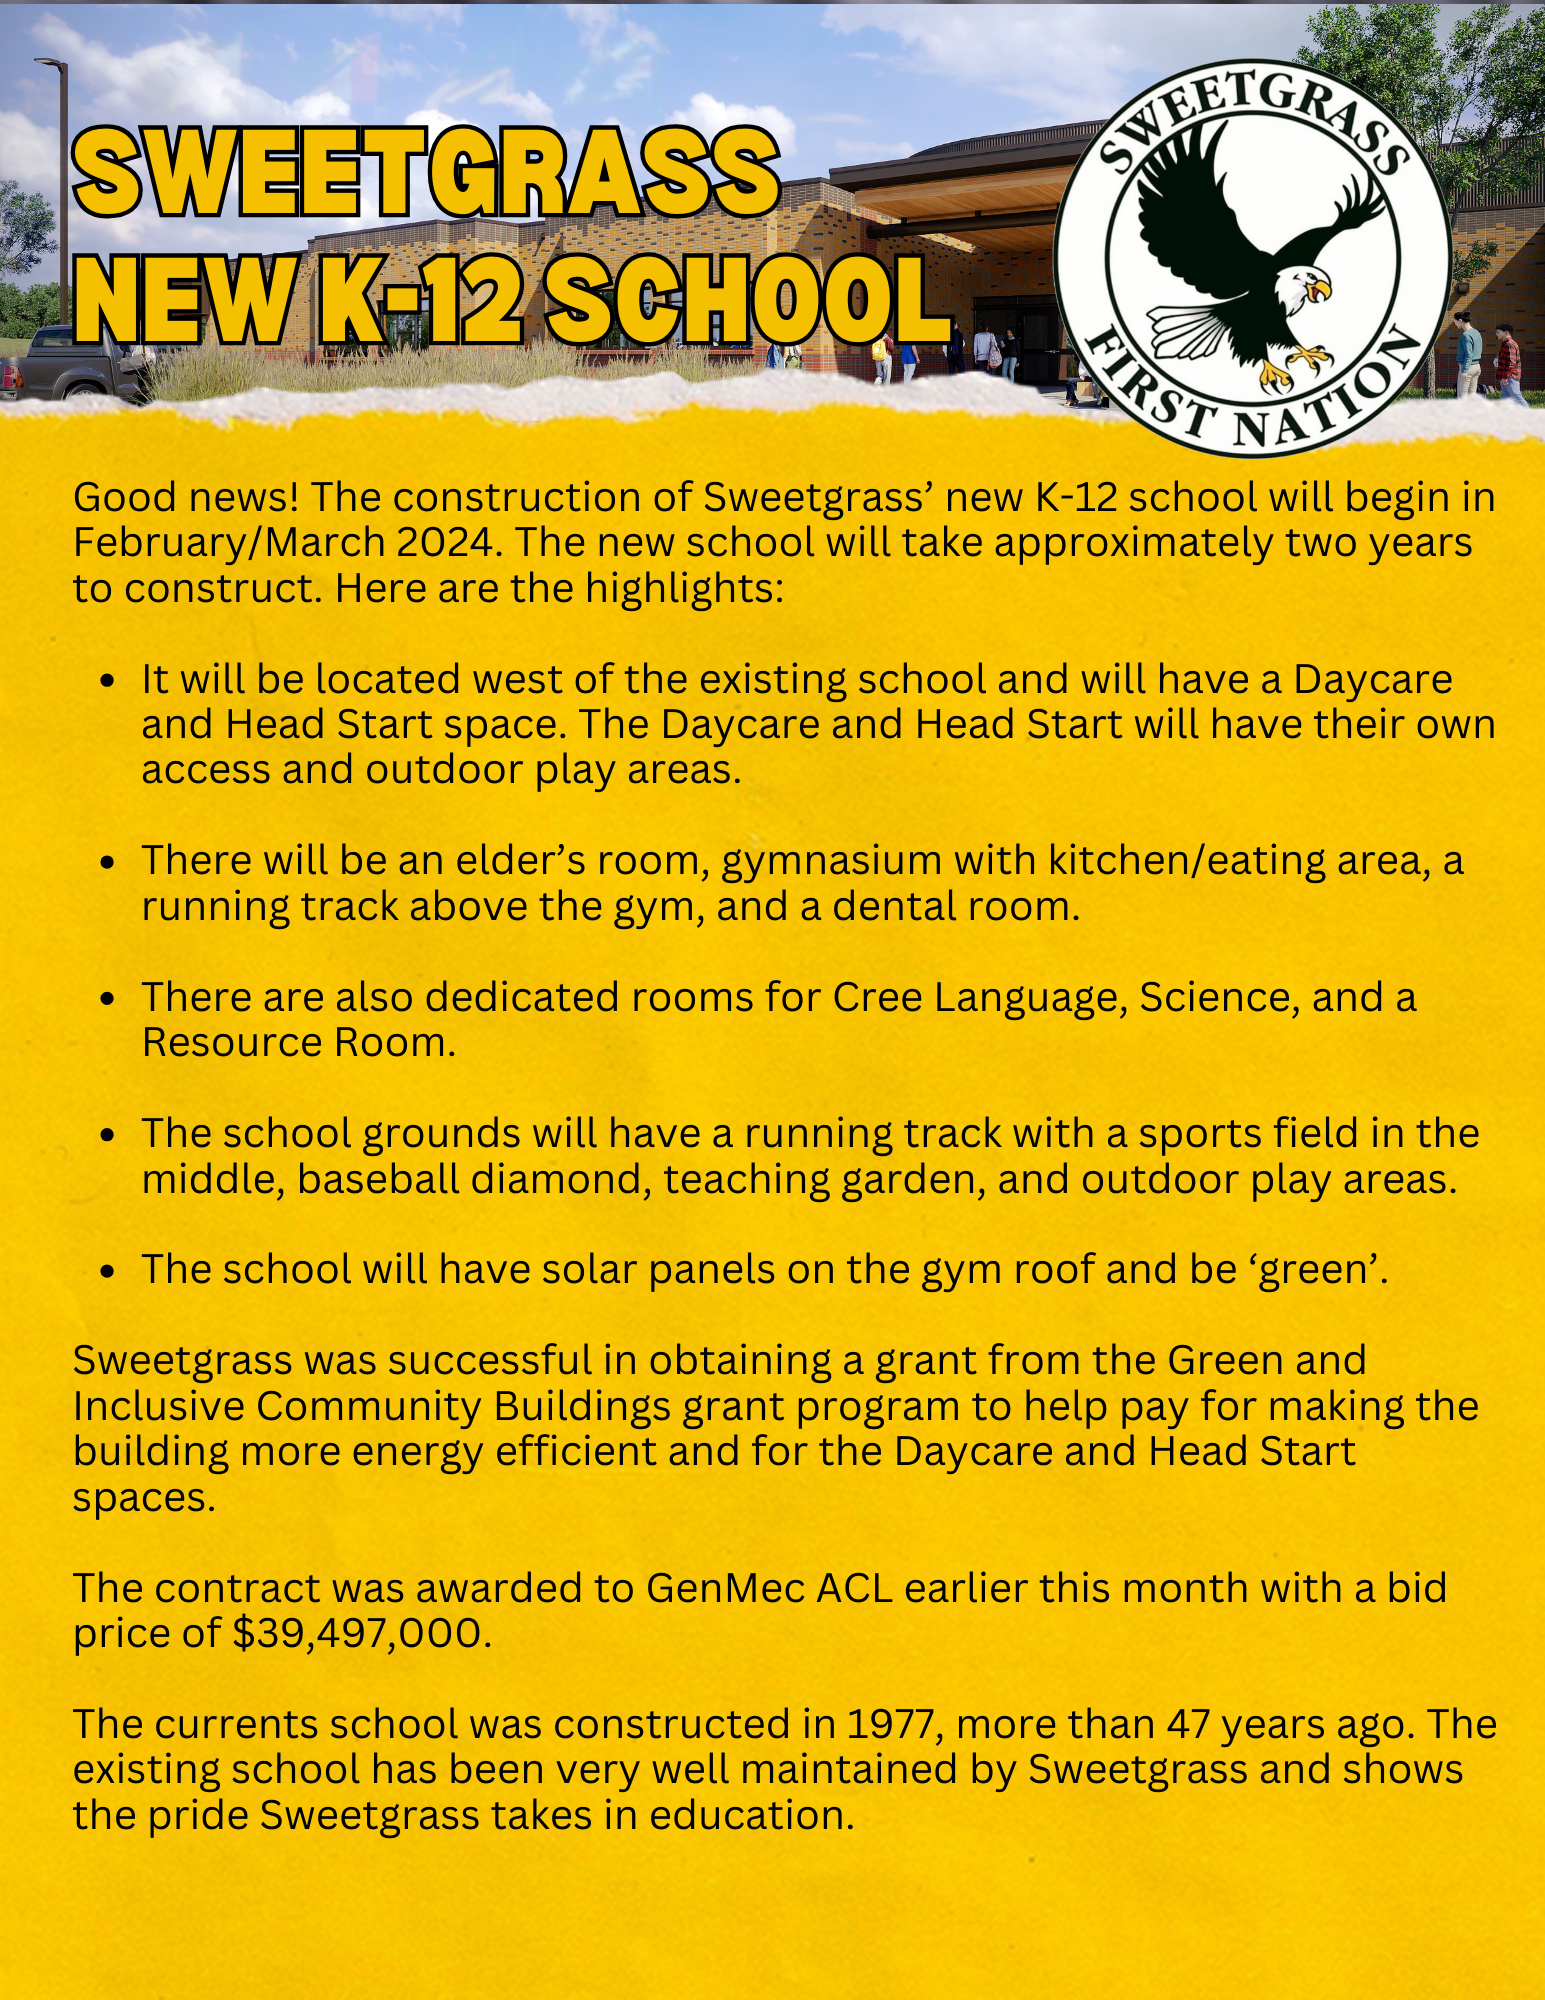 New School - Facts Sheet